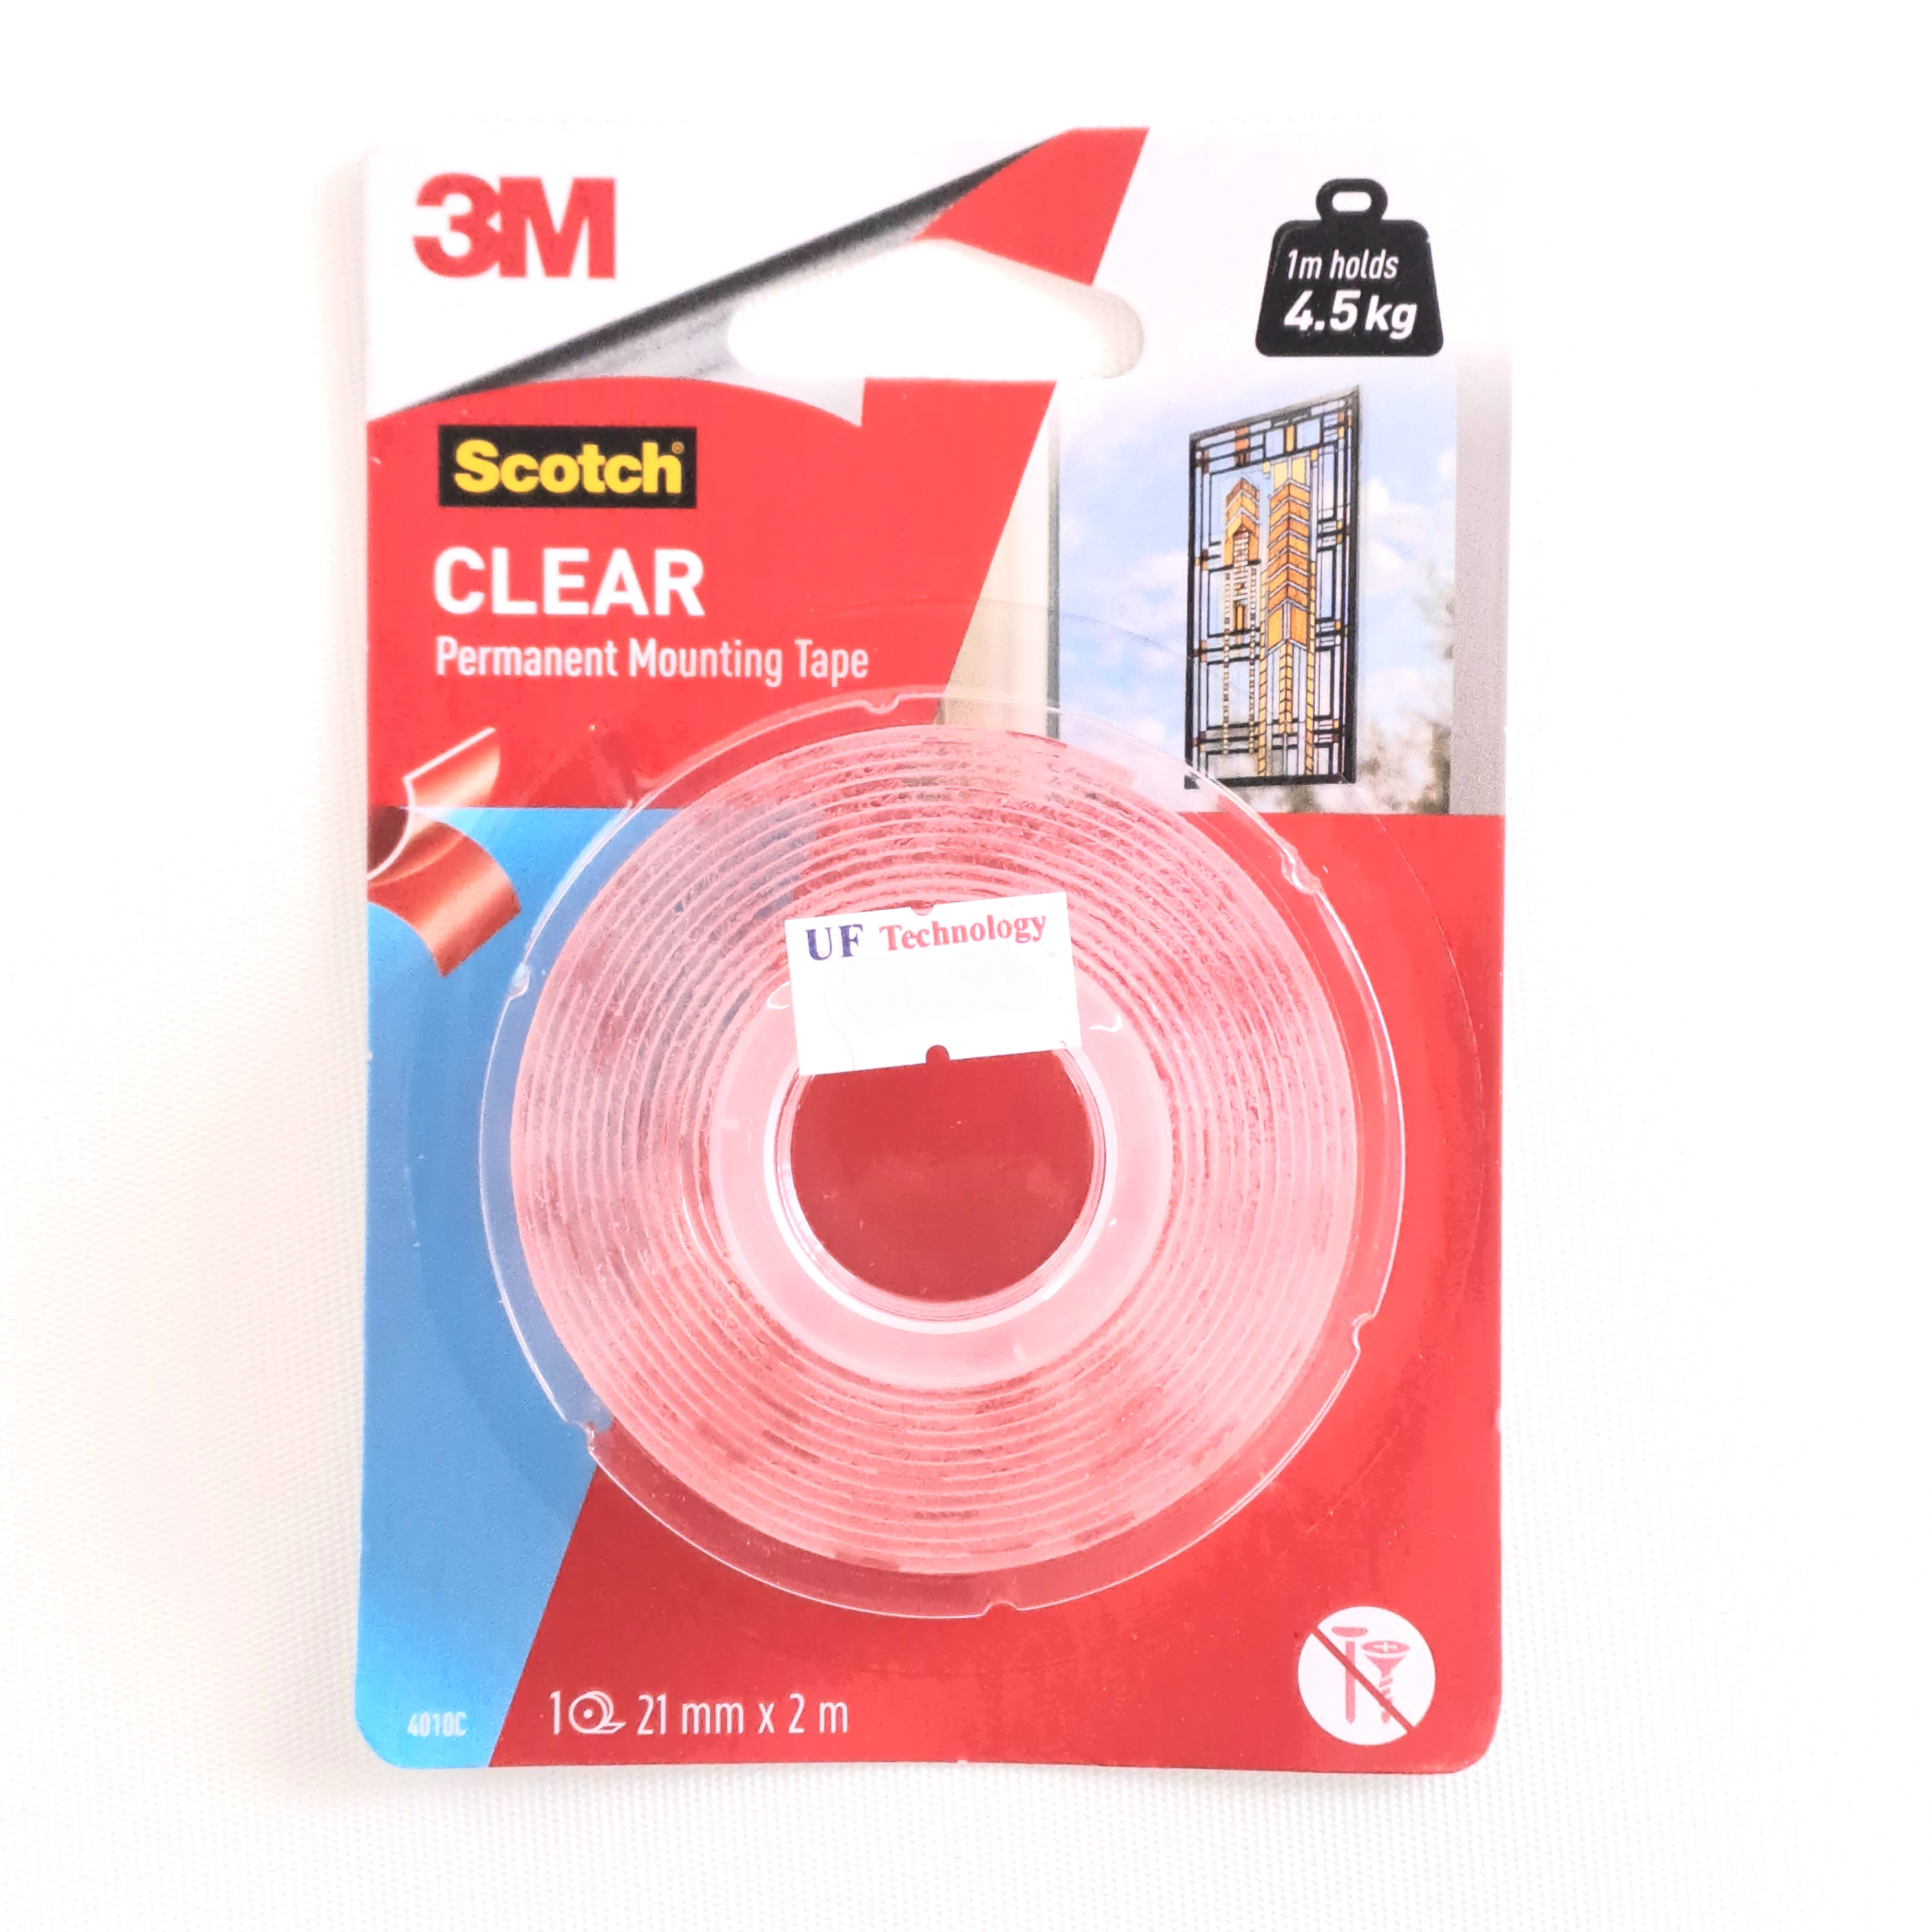 3M Scotch Clear Mounting Tape Cat 4010C 21mm x 2m (7669)